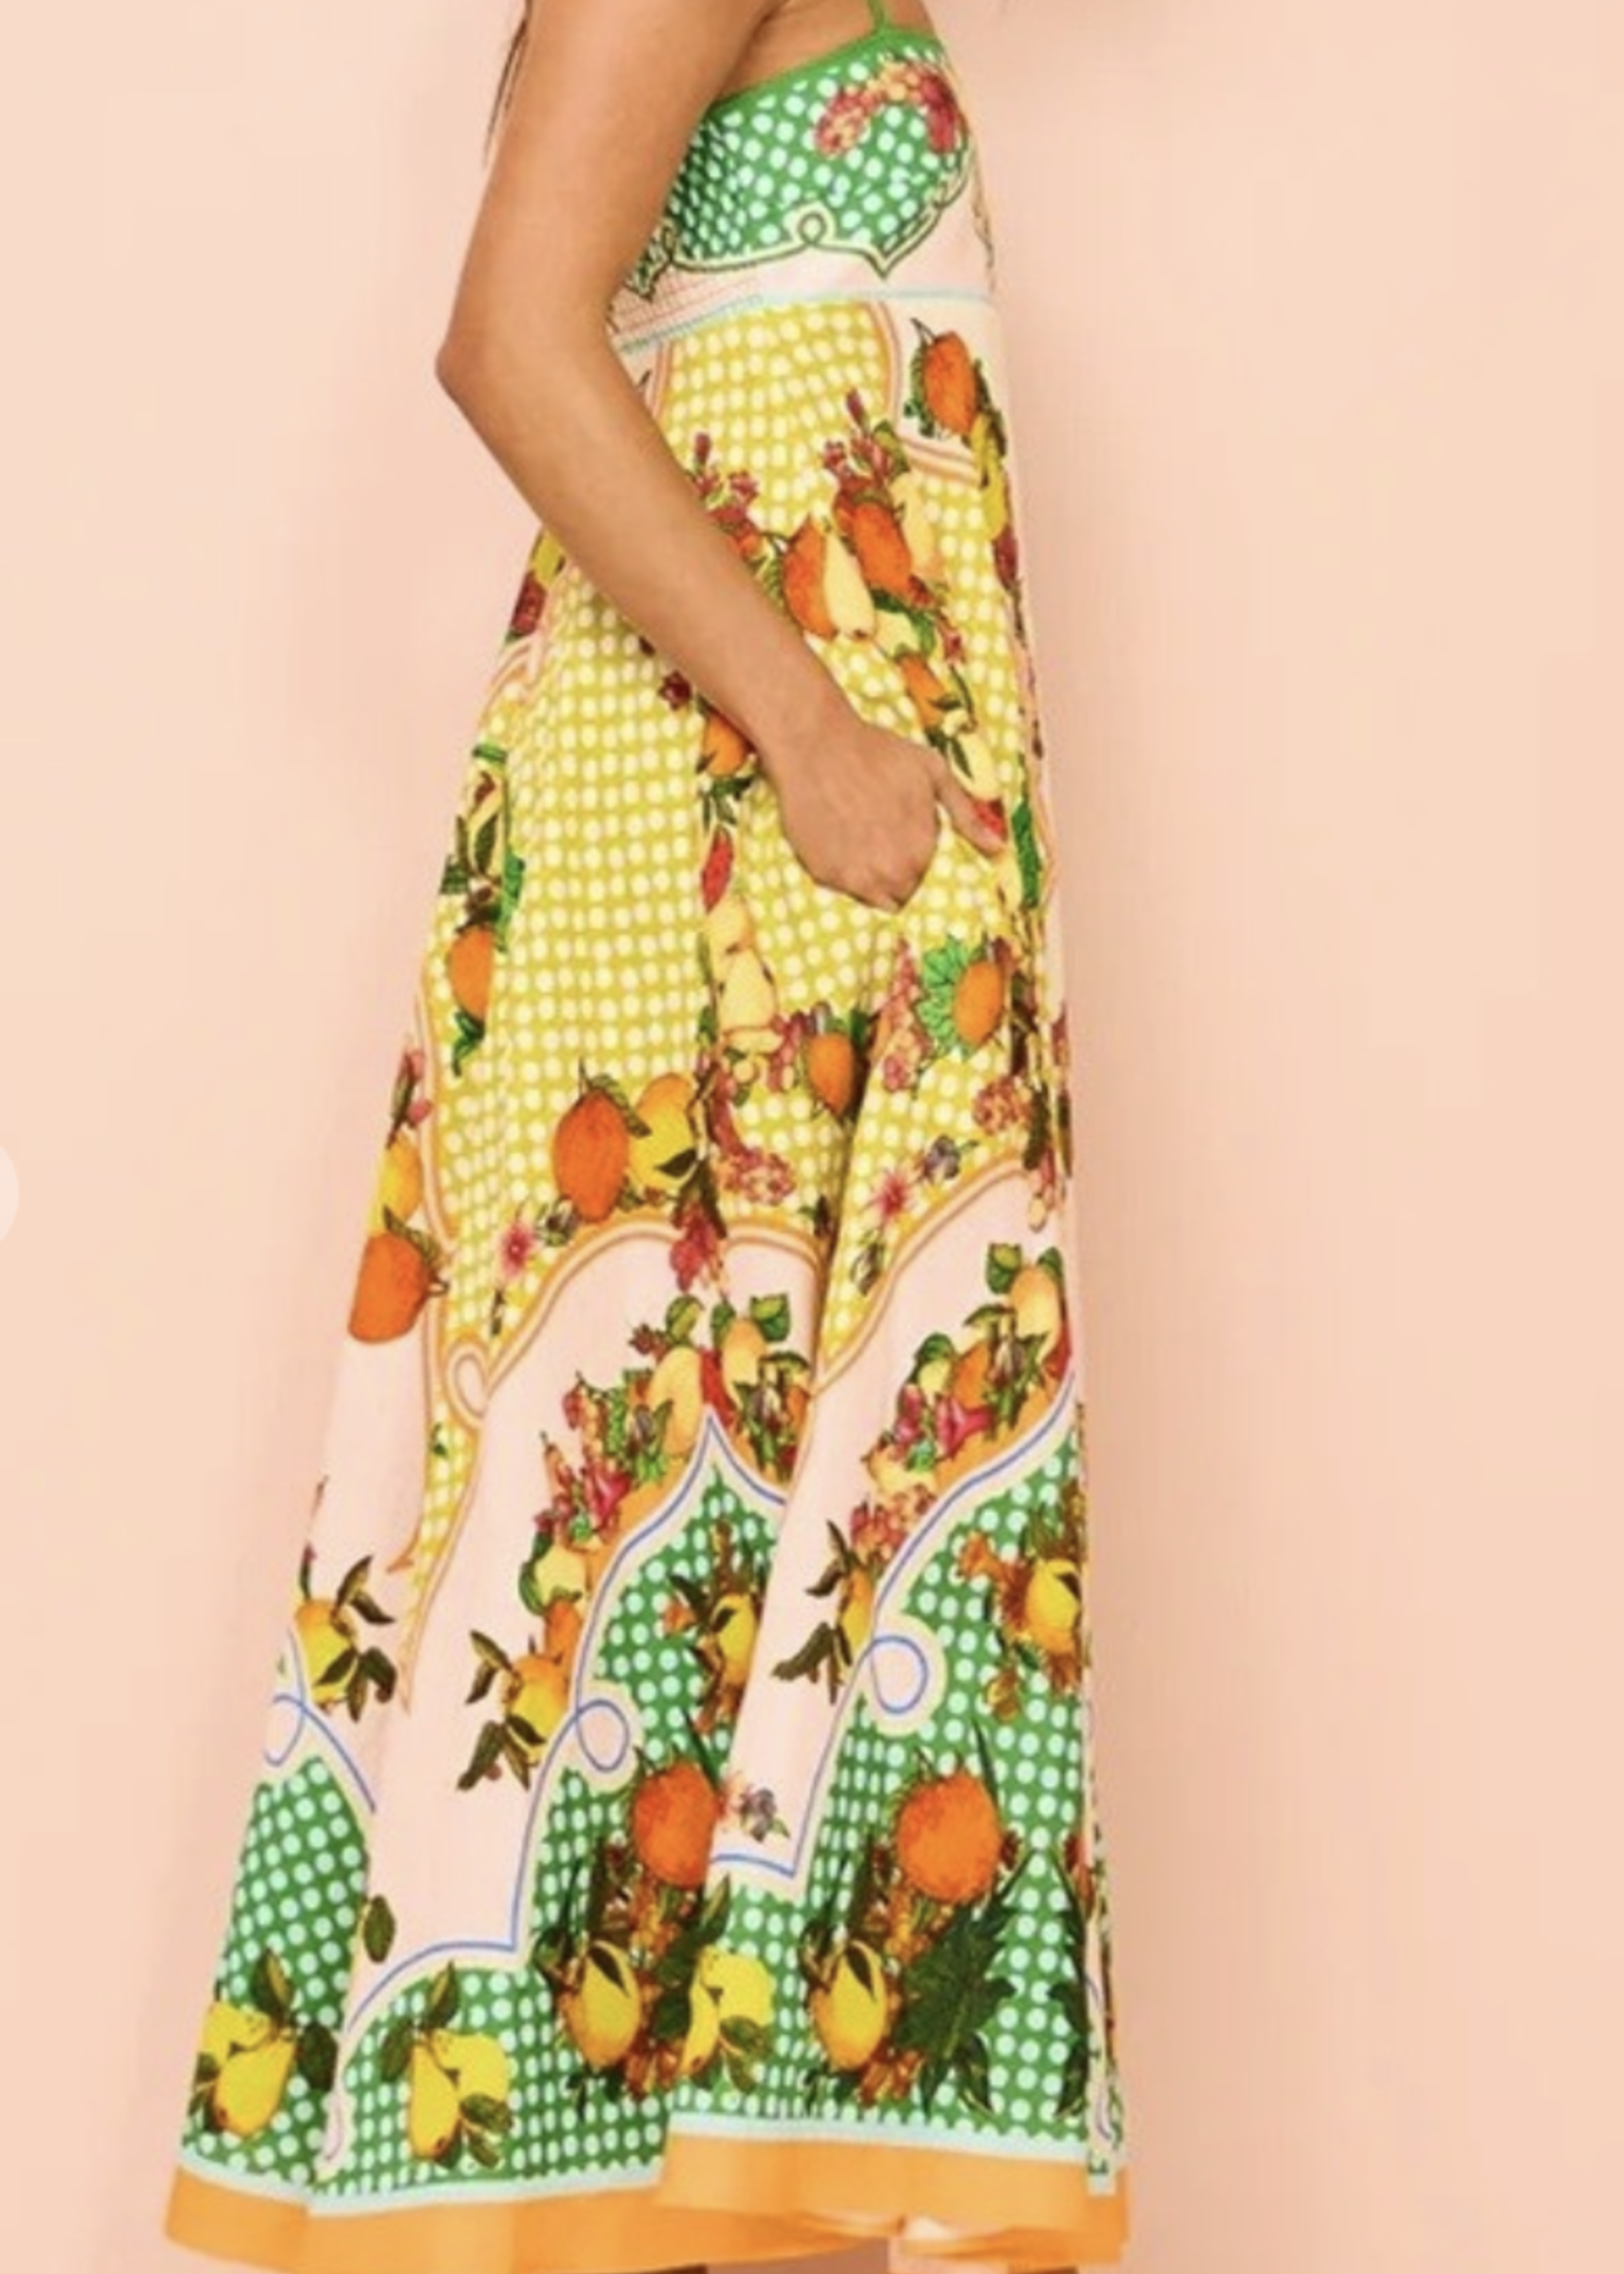 SU SU Fruit Print Long Dress